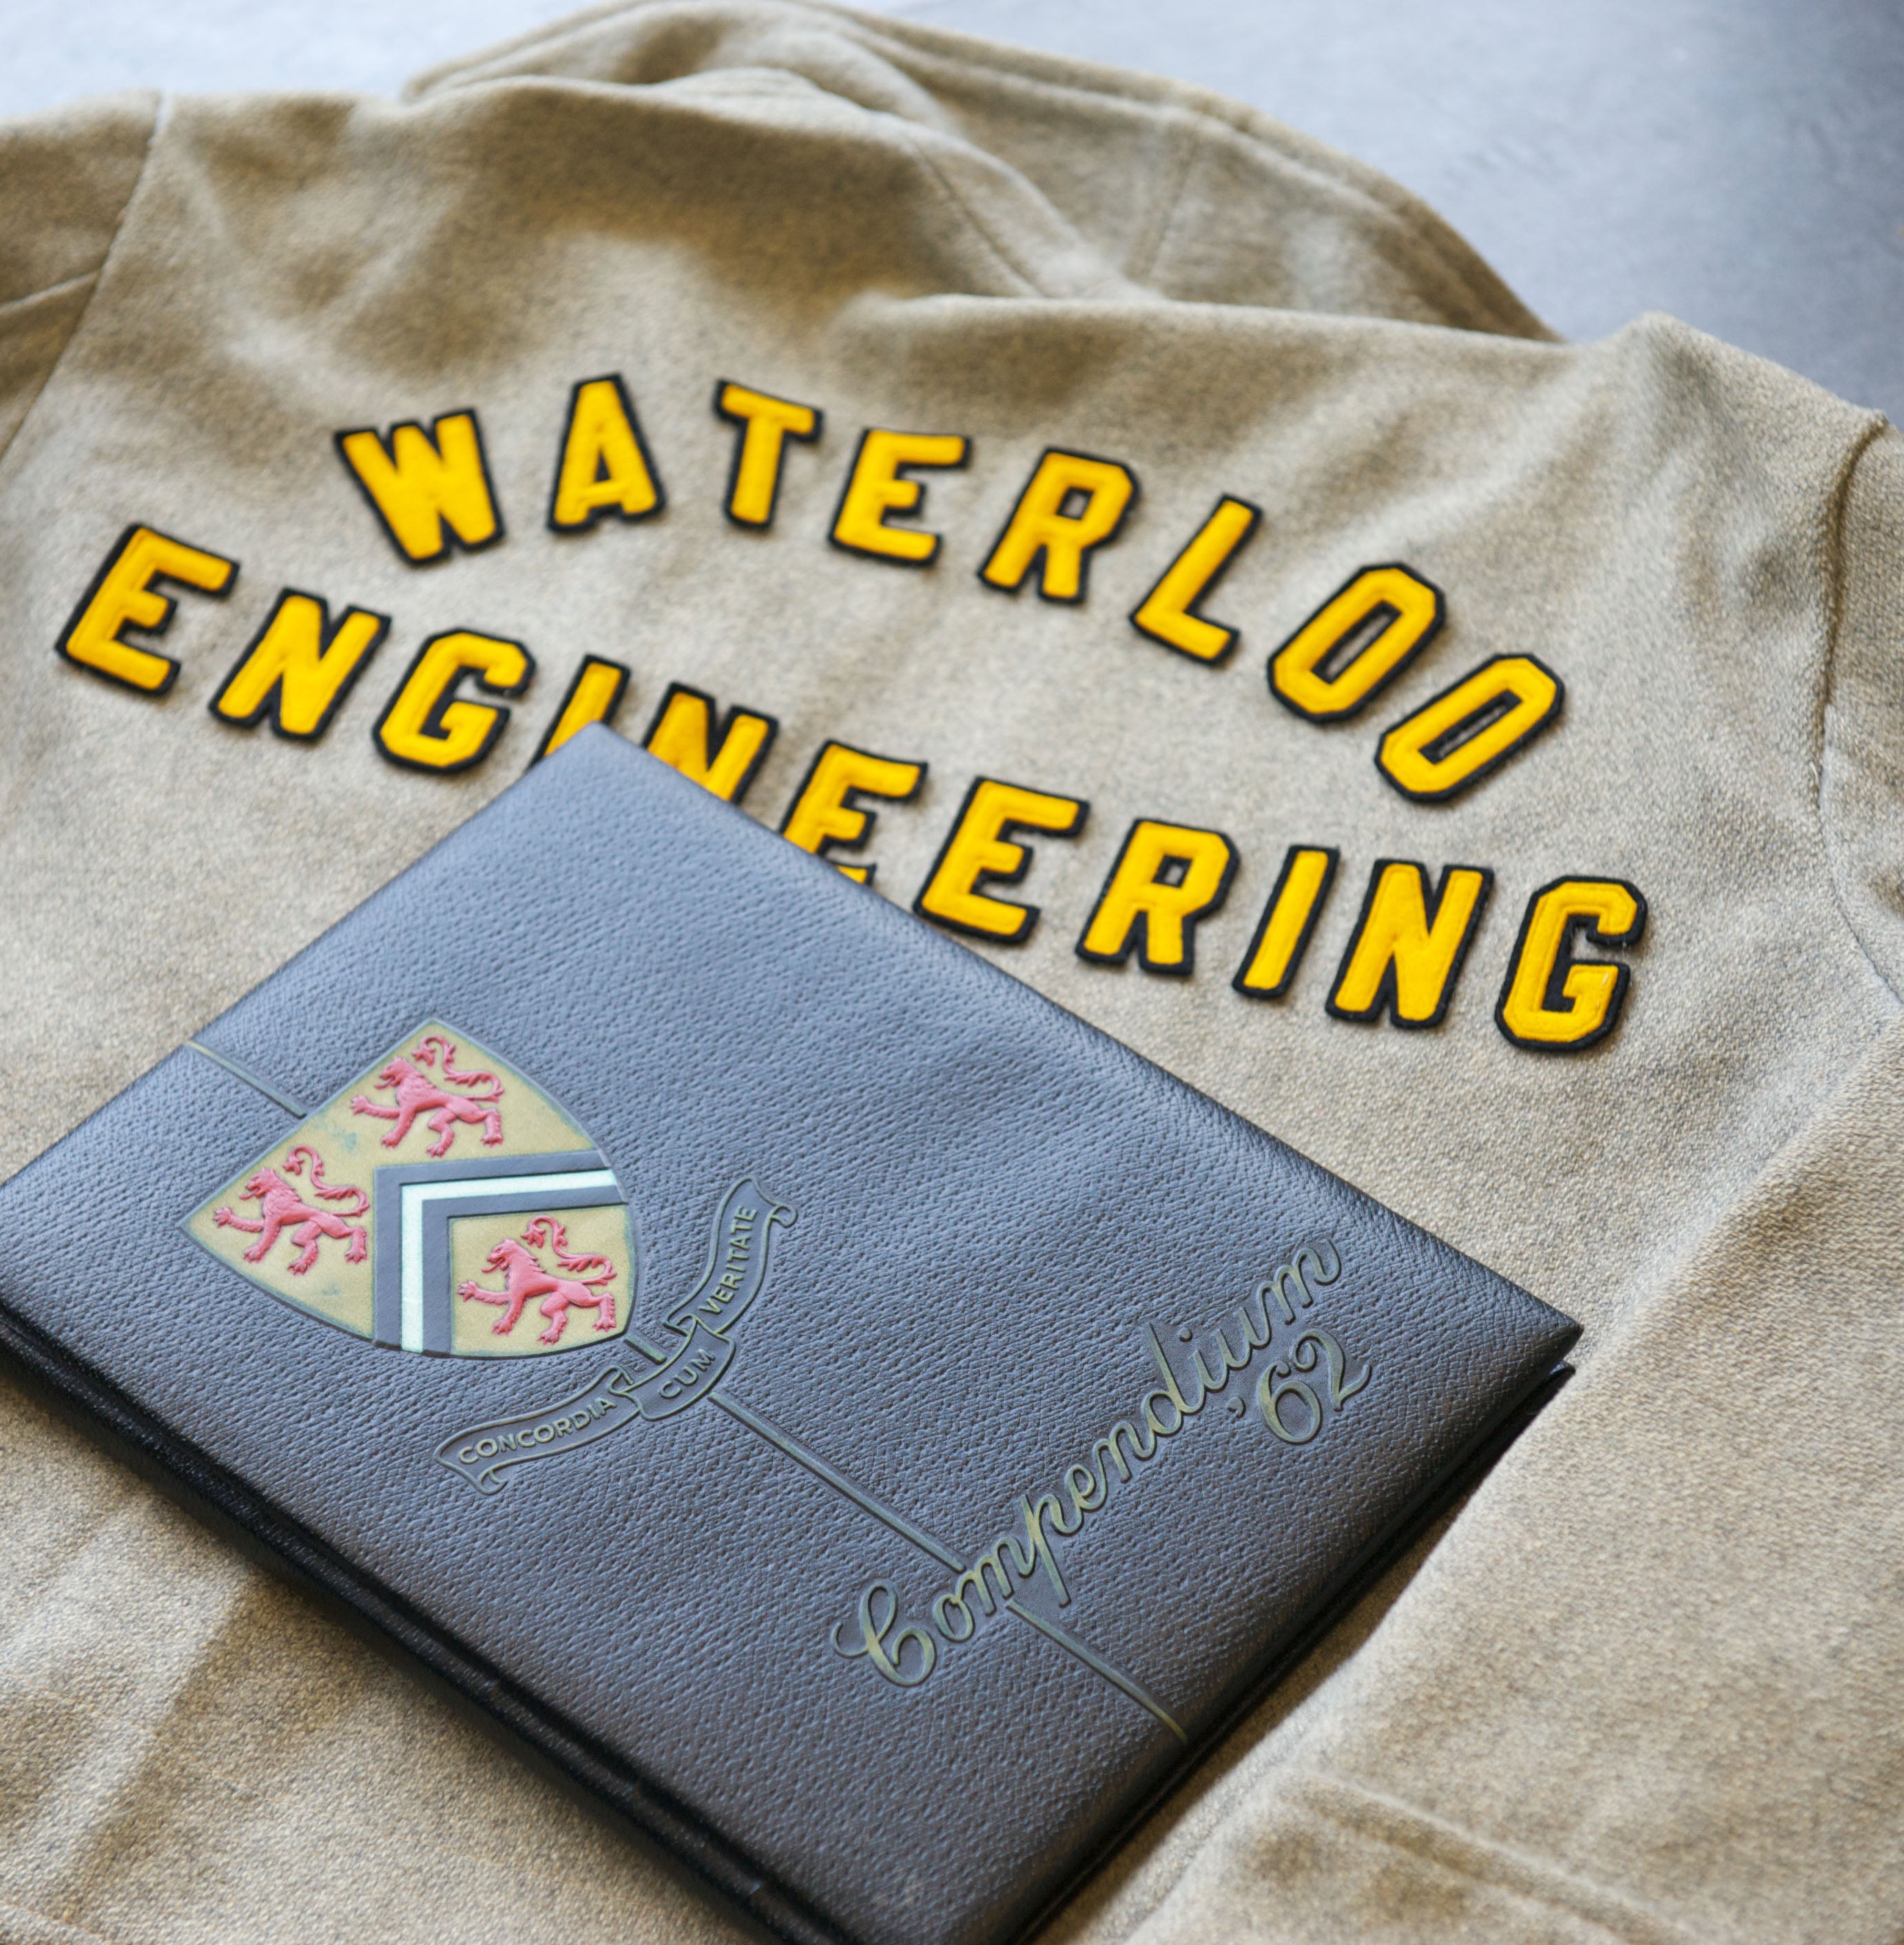 Engineering yearbook and jacket